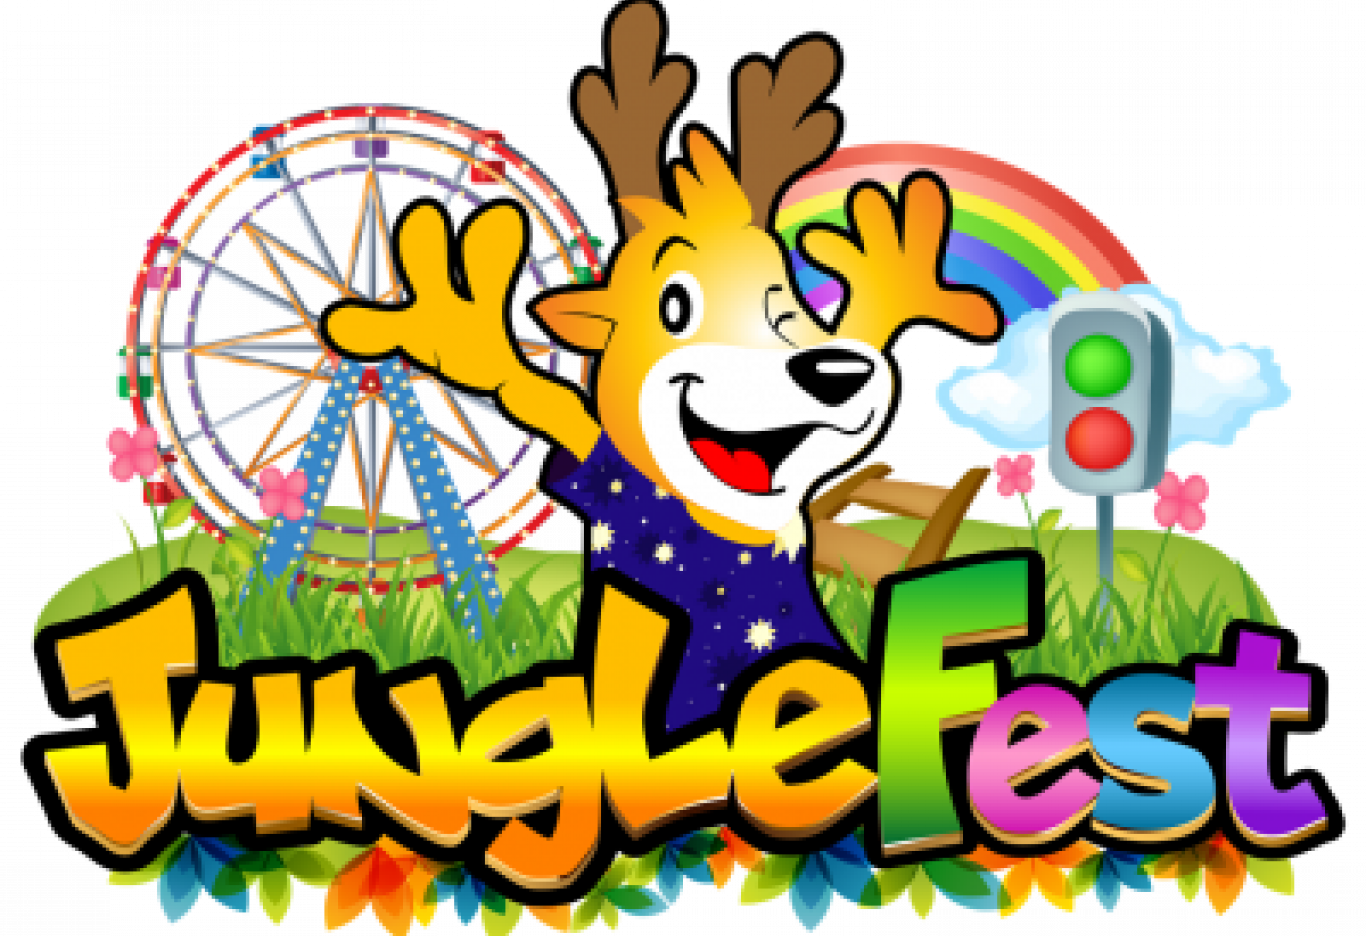 Jungle Fest